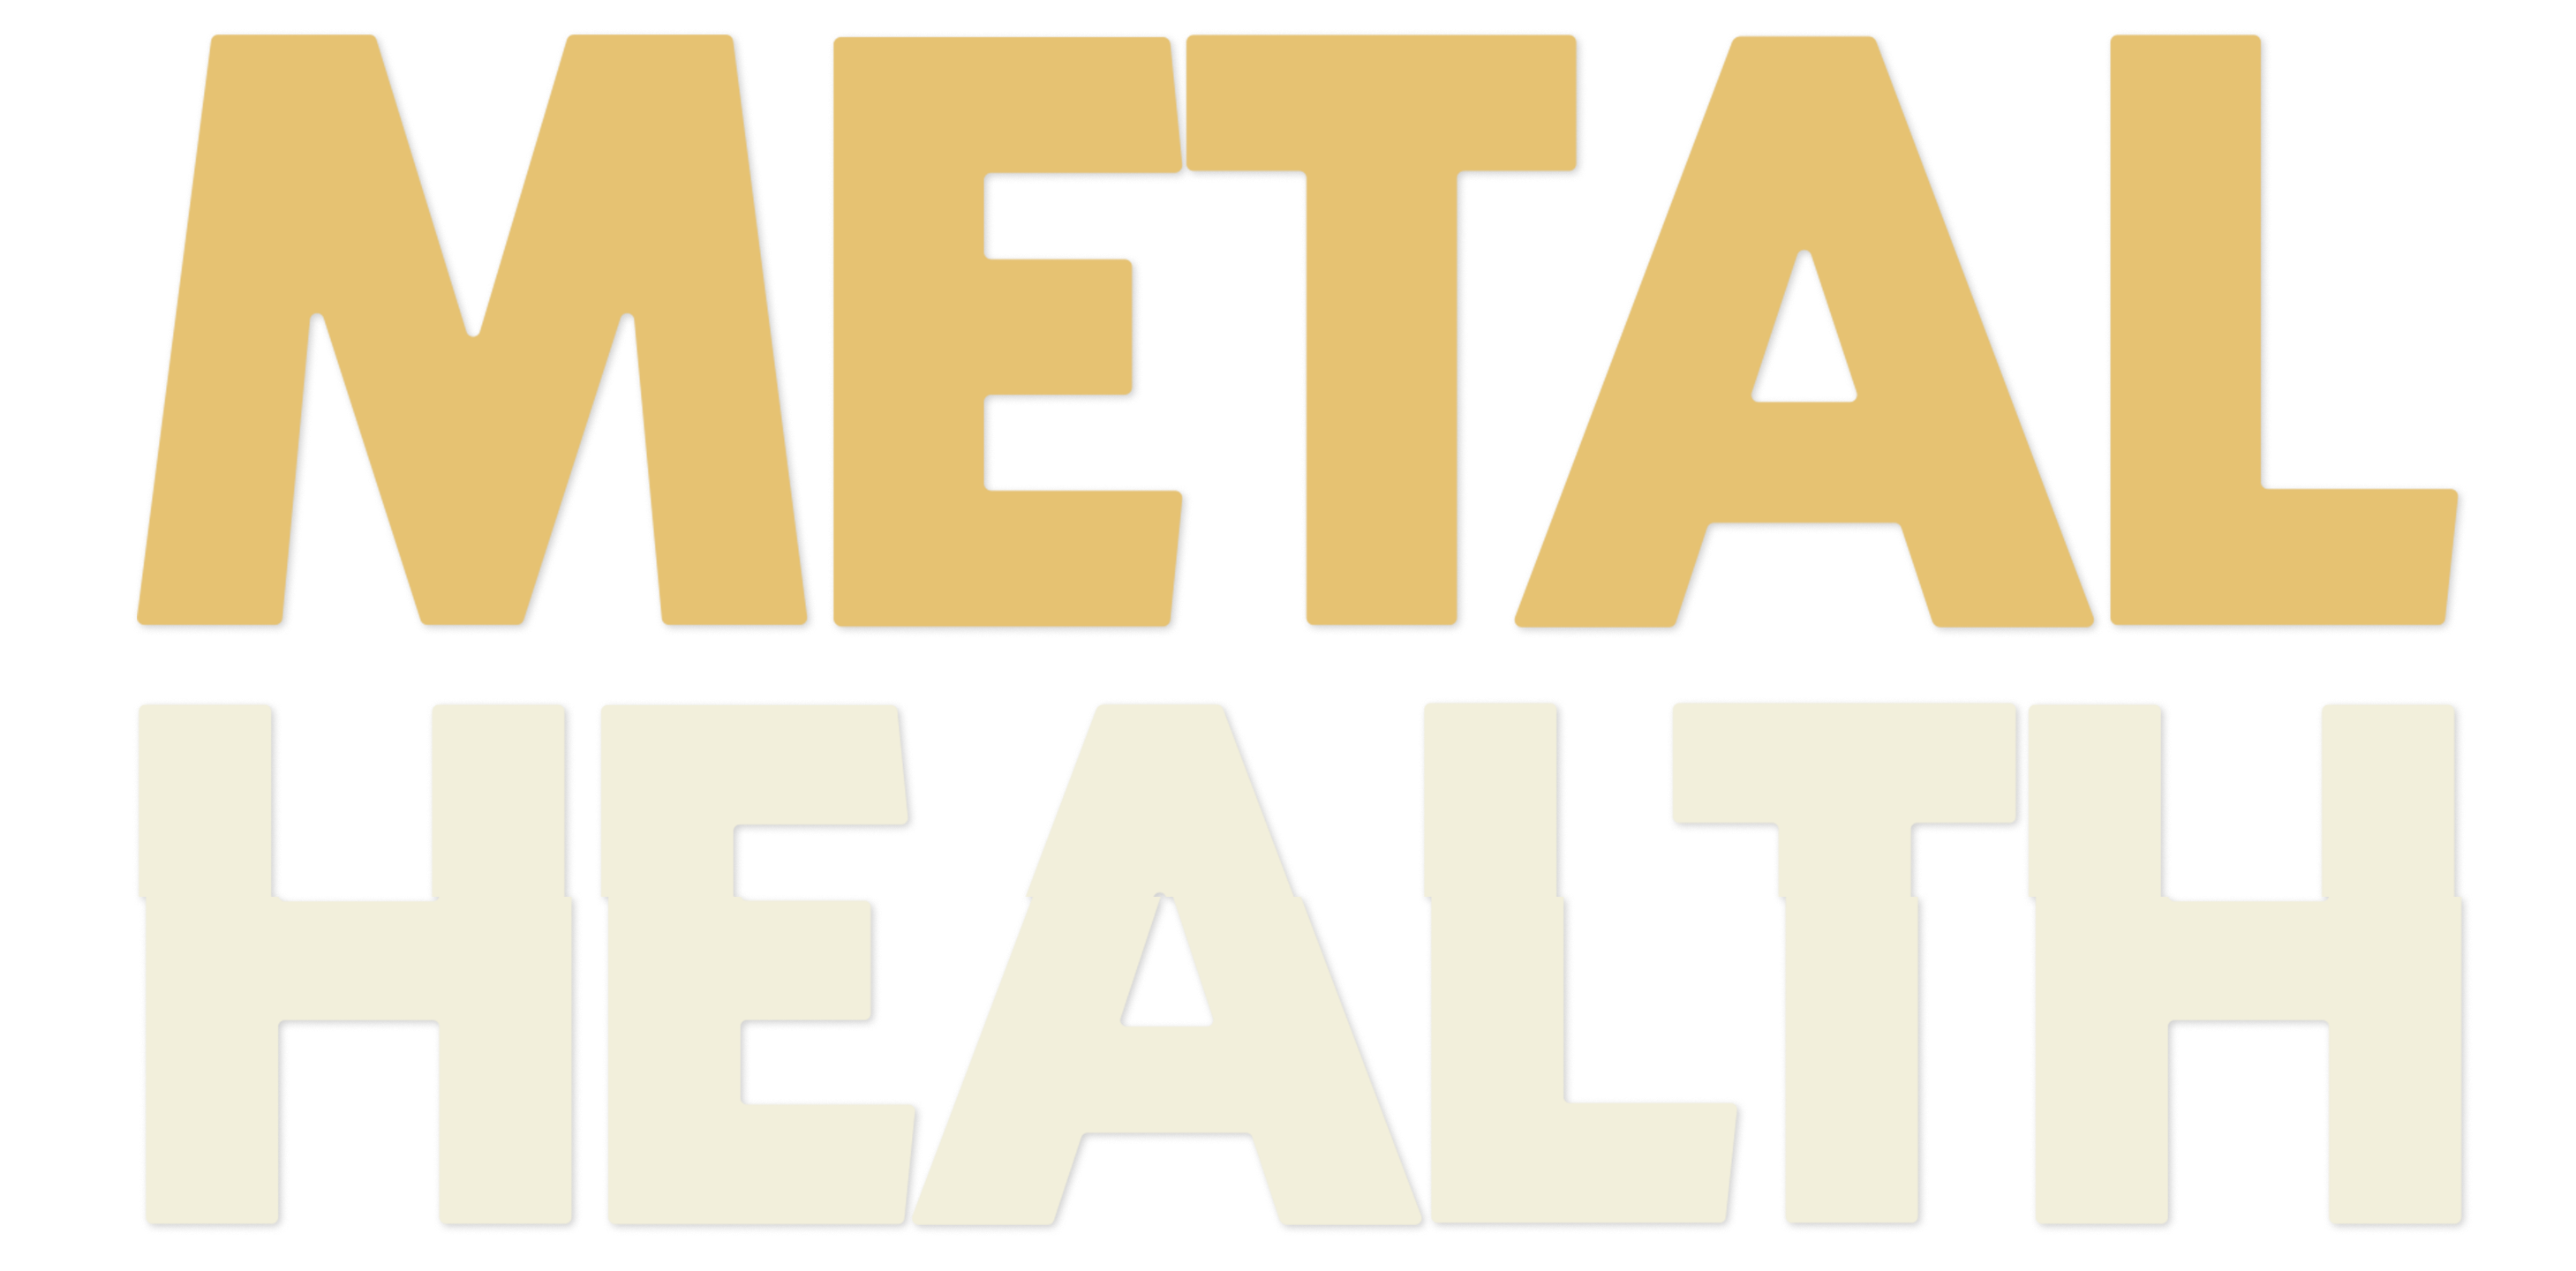 Metal Health